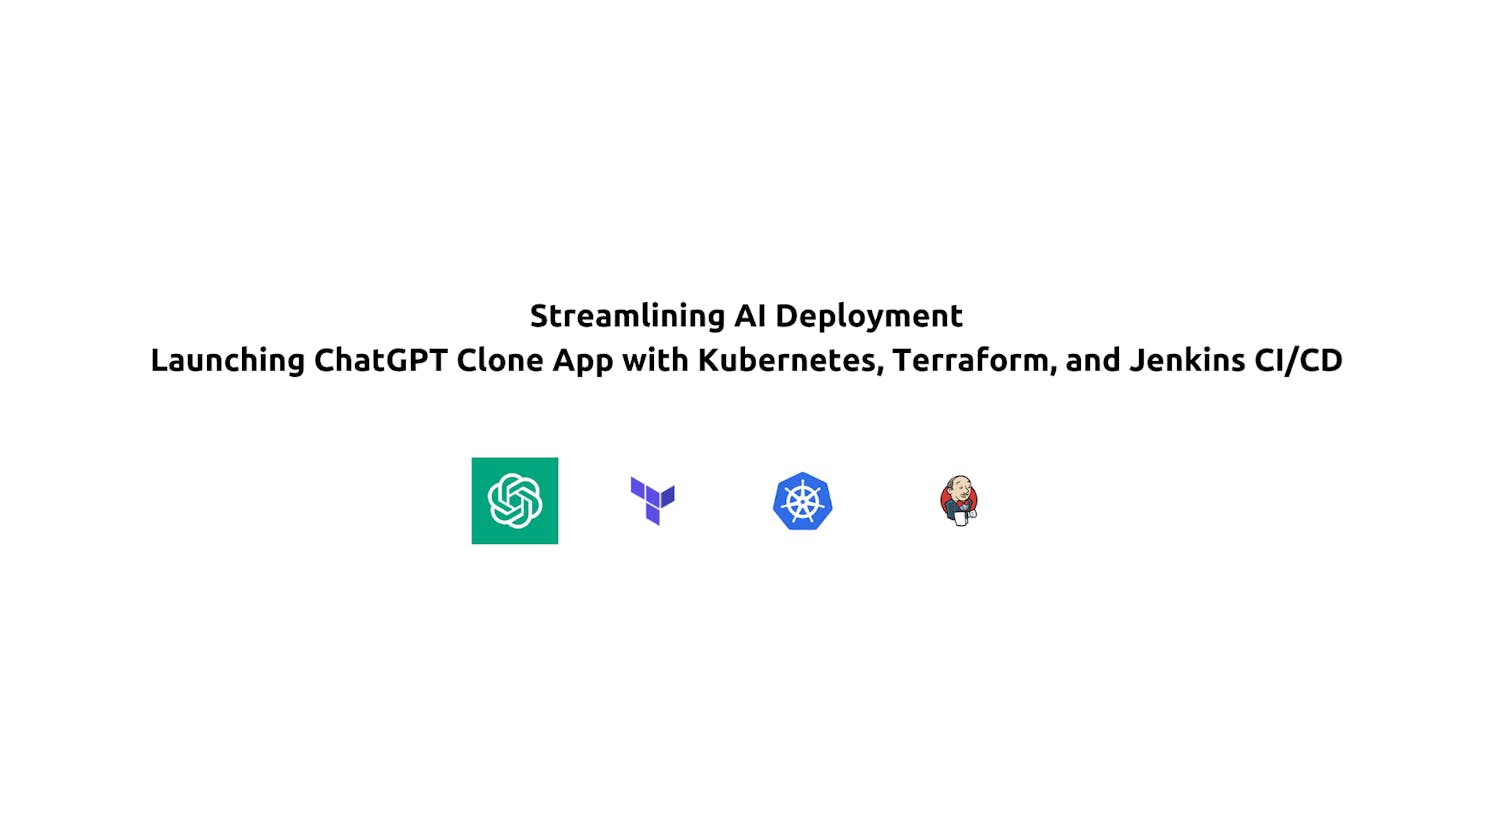 Streamlining AI Deployment: Launching ChatGPT Clone App with Kubernetes, Terraform, and Jenkins CI/CD